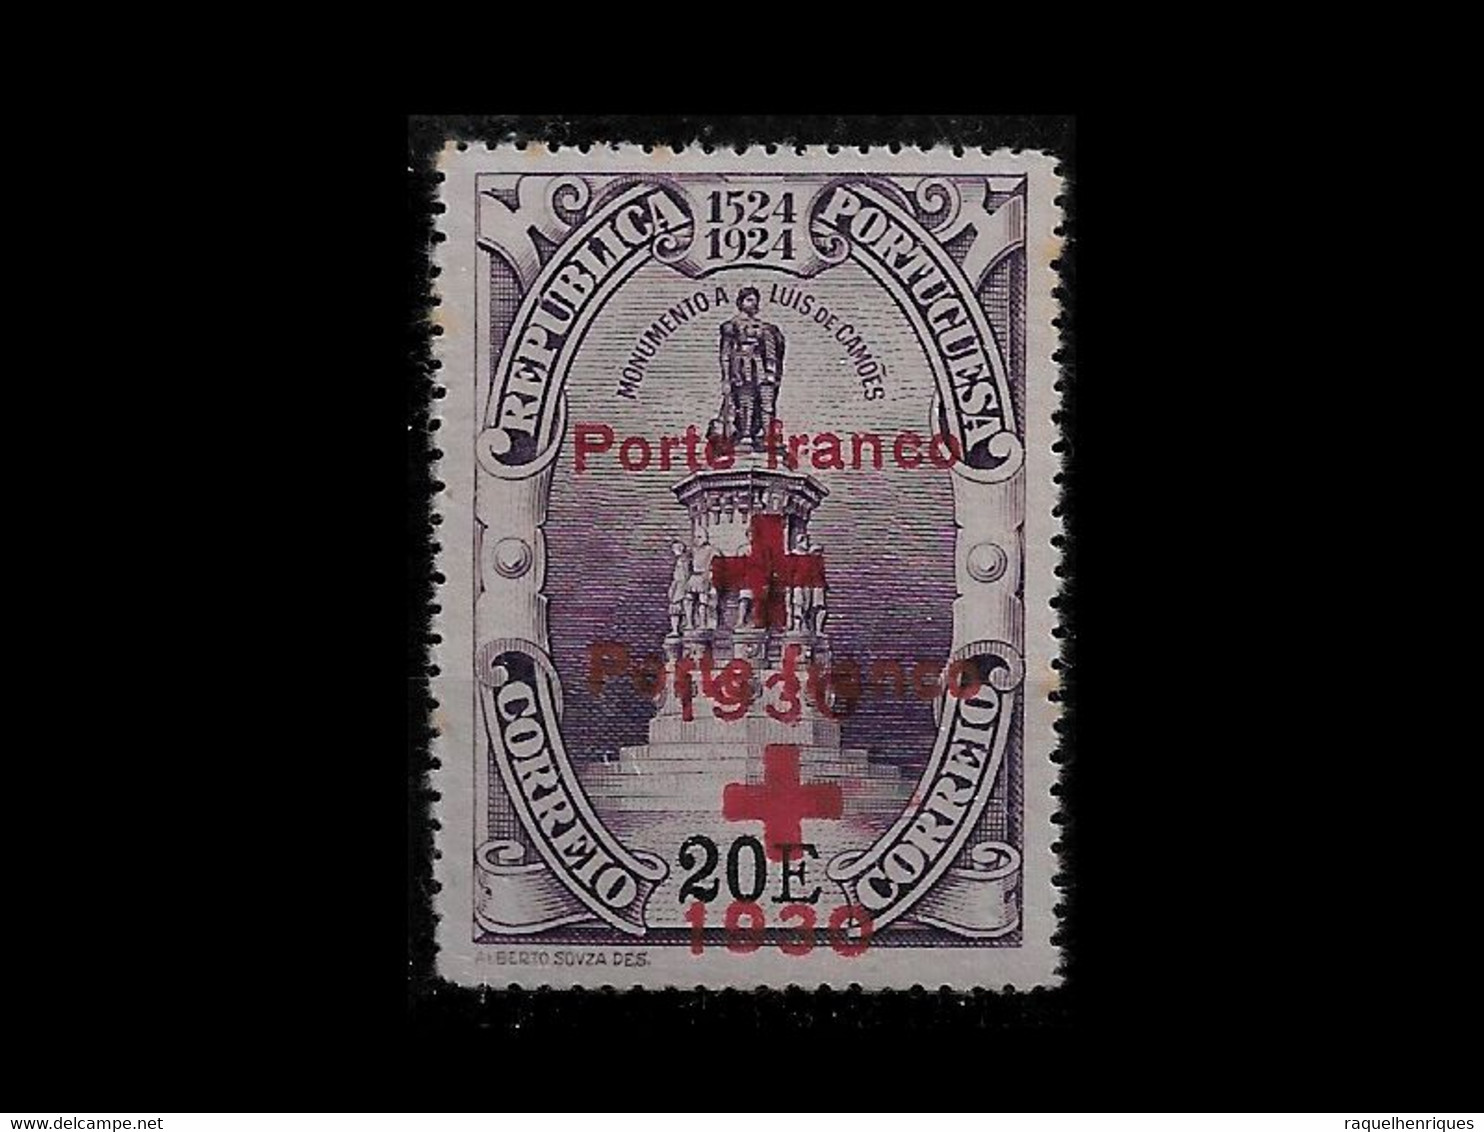 PORTUGAL PORTE FRANCO - 1930 ERROR DOUBLE SURCHARGED MNH (PLB#01-109) - Ungebraucht